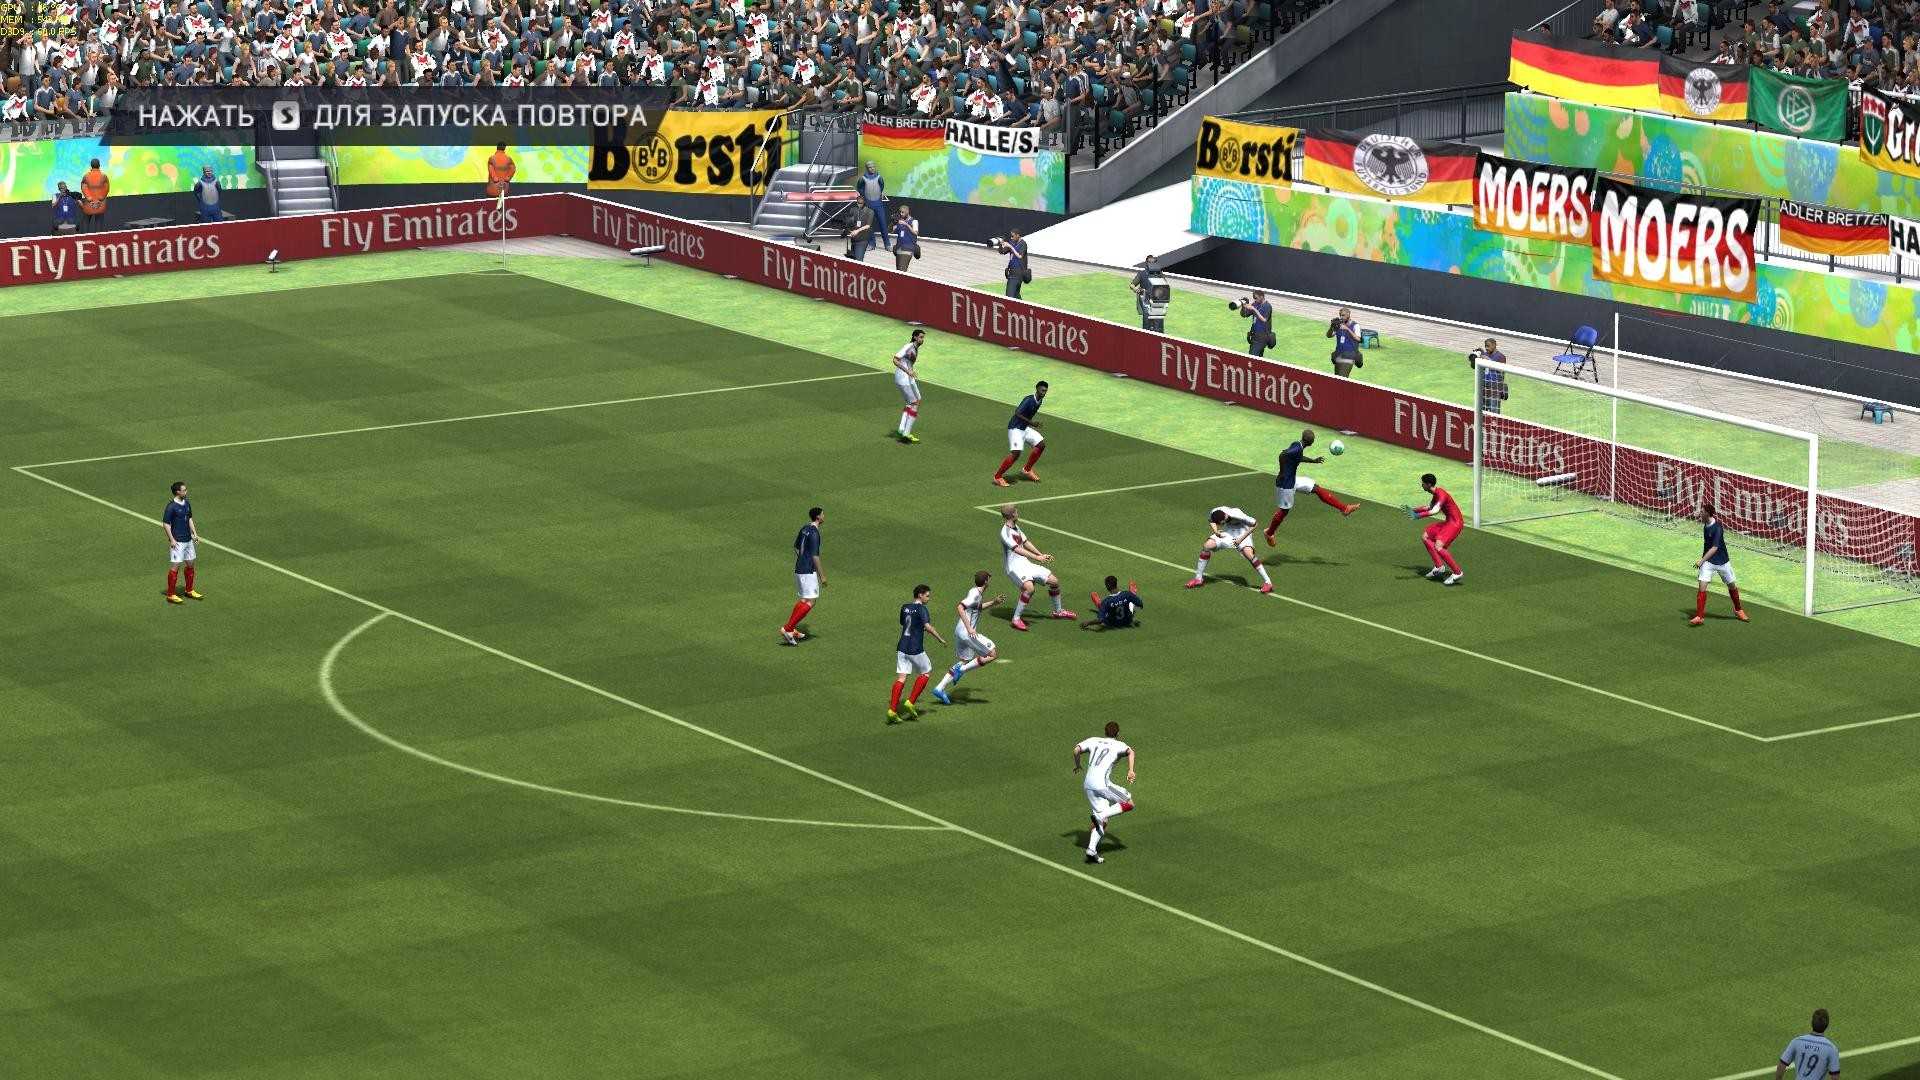 Игры мир рпл. FIFA Soccer 14. ФИФА 14 ворлд кап. ФИФА версия 14.700. FIFA 14 5.